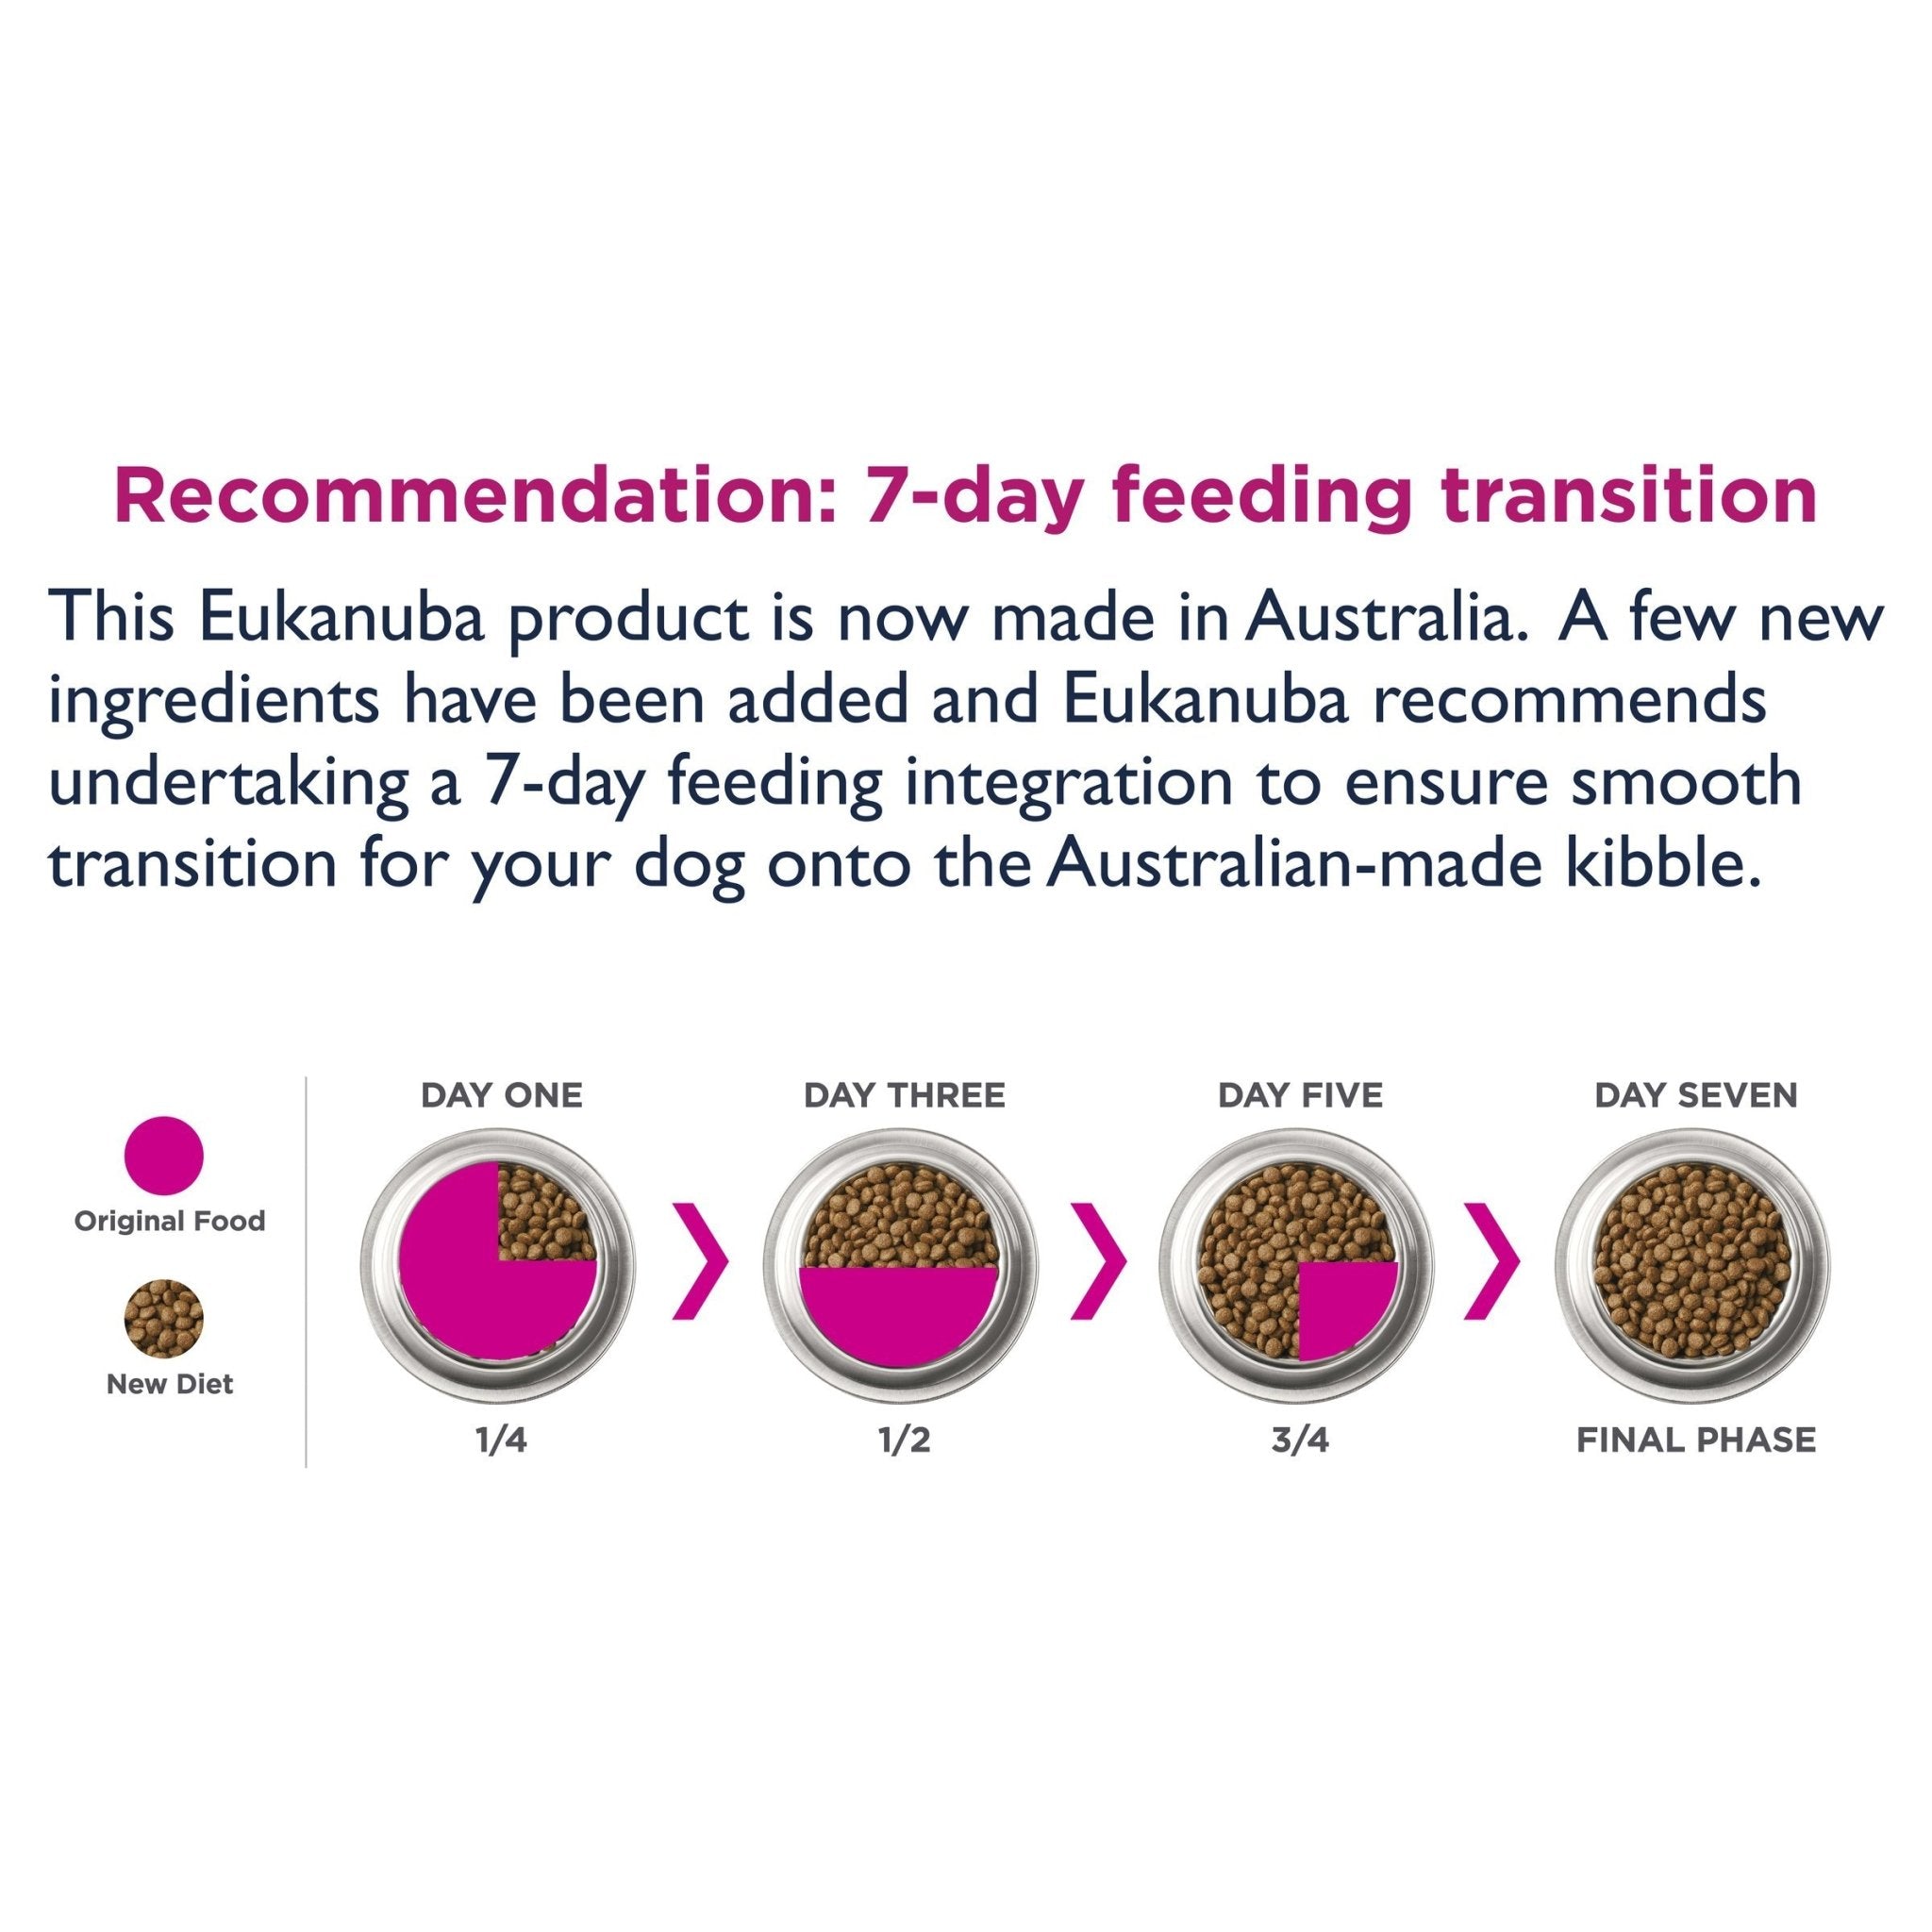 Eukanuba™ Senior Medium Breed Dry Dog Food 15kg